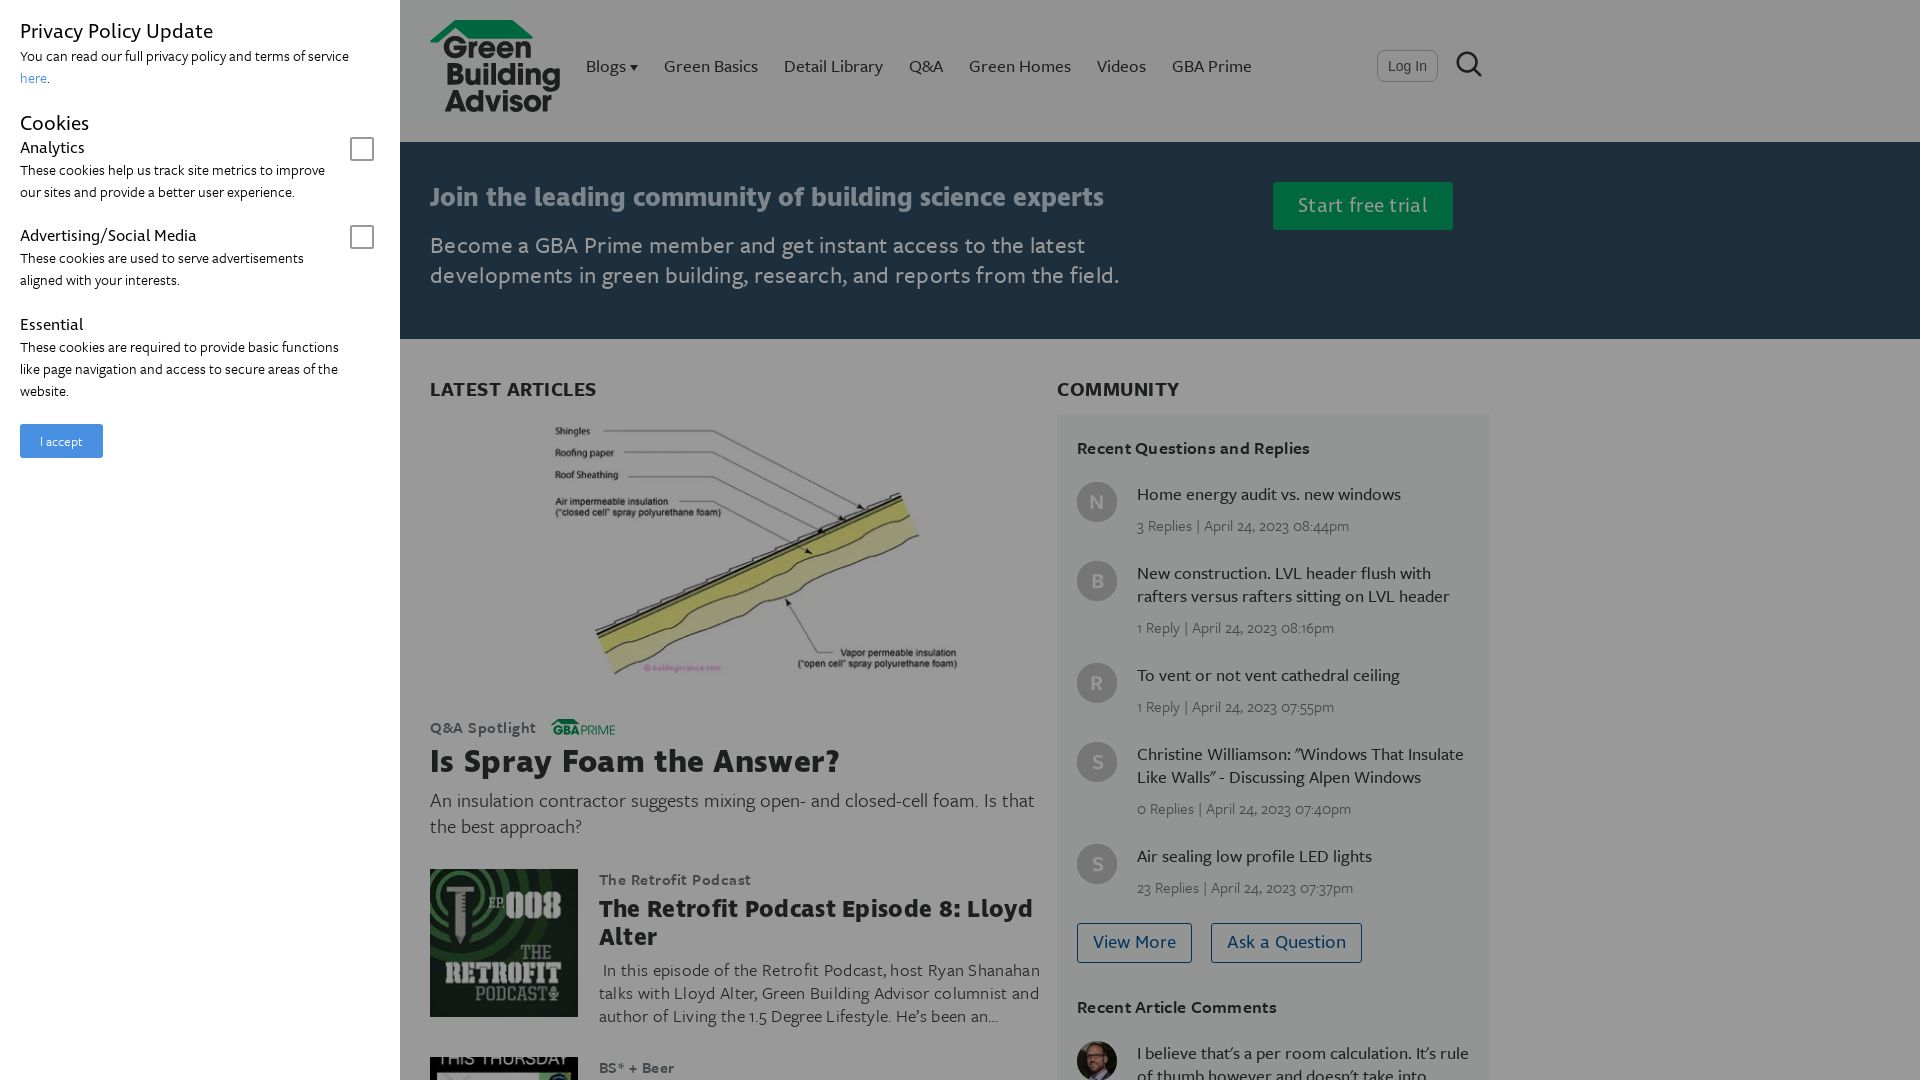 Webseitenstatus greenbuildingadvisor.com ist   ONLINE